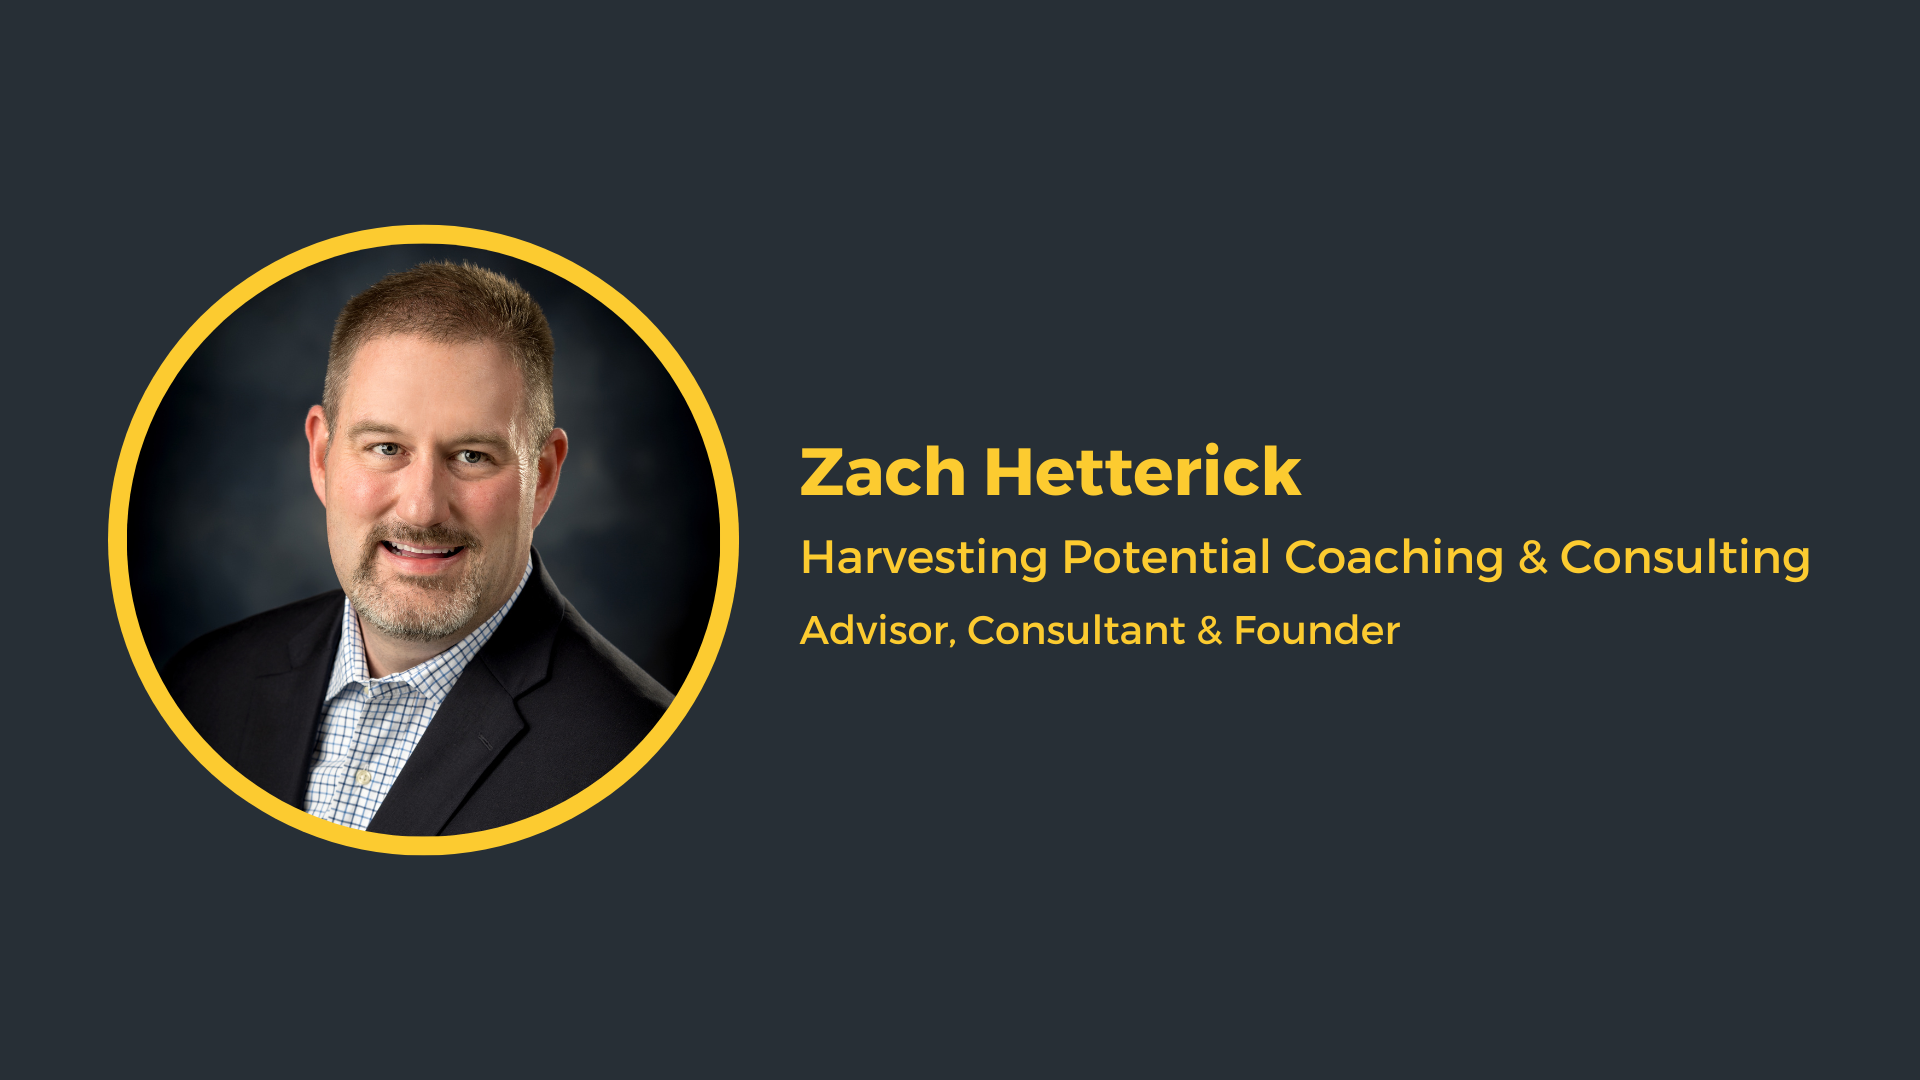 Zach Hetterick Advisor, Consultant & Founder Harvesting Potential Coaching & Consulting